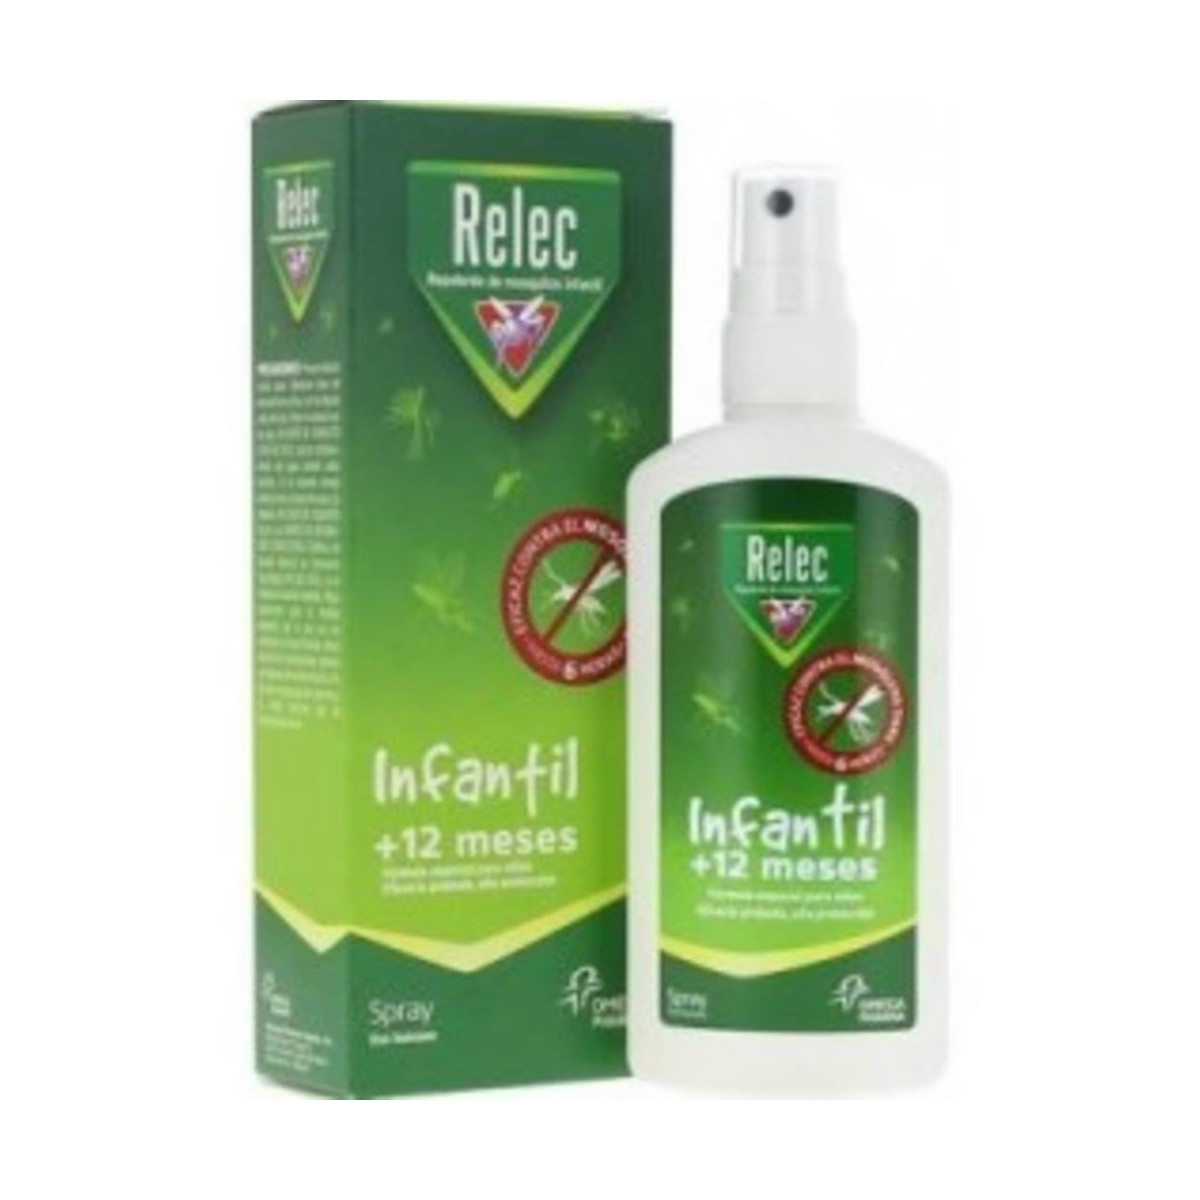 relec-infantil-12-meses-spray-100-ml